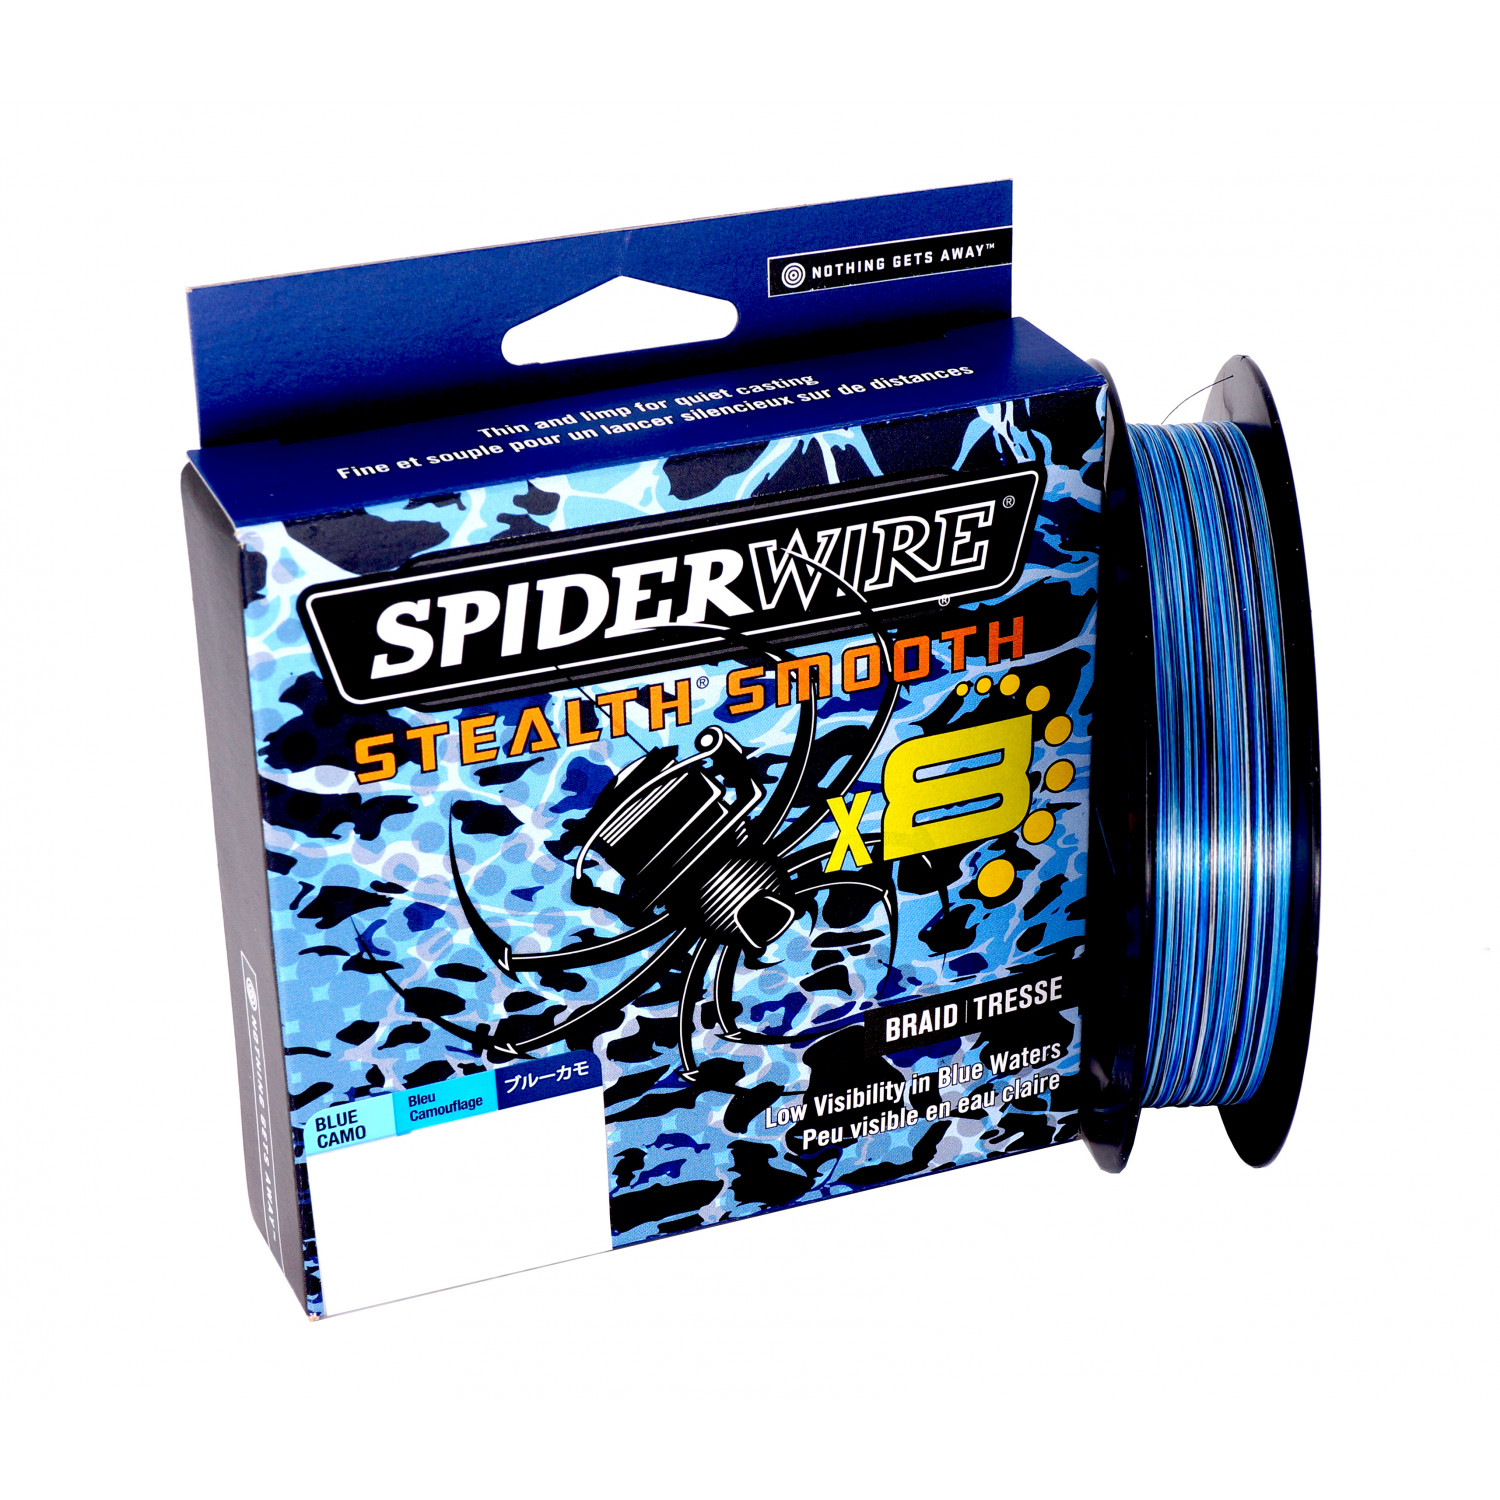 Spiderwire Stealth Smooth 8 Blue Camo 150m, 300m